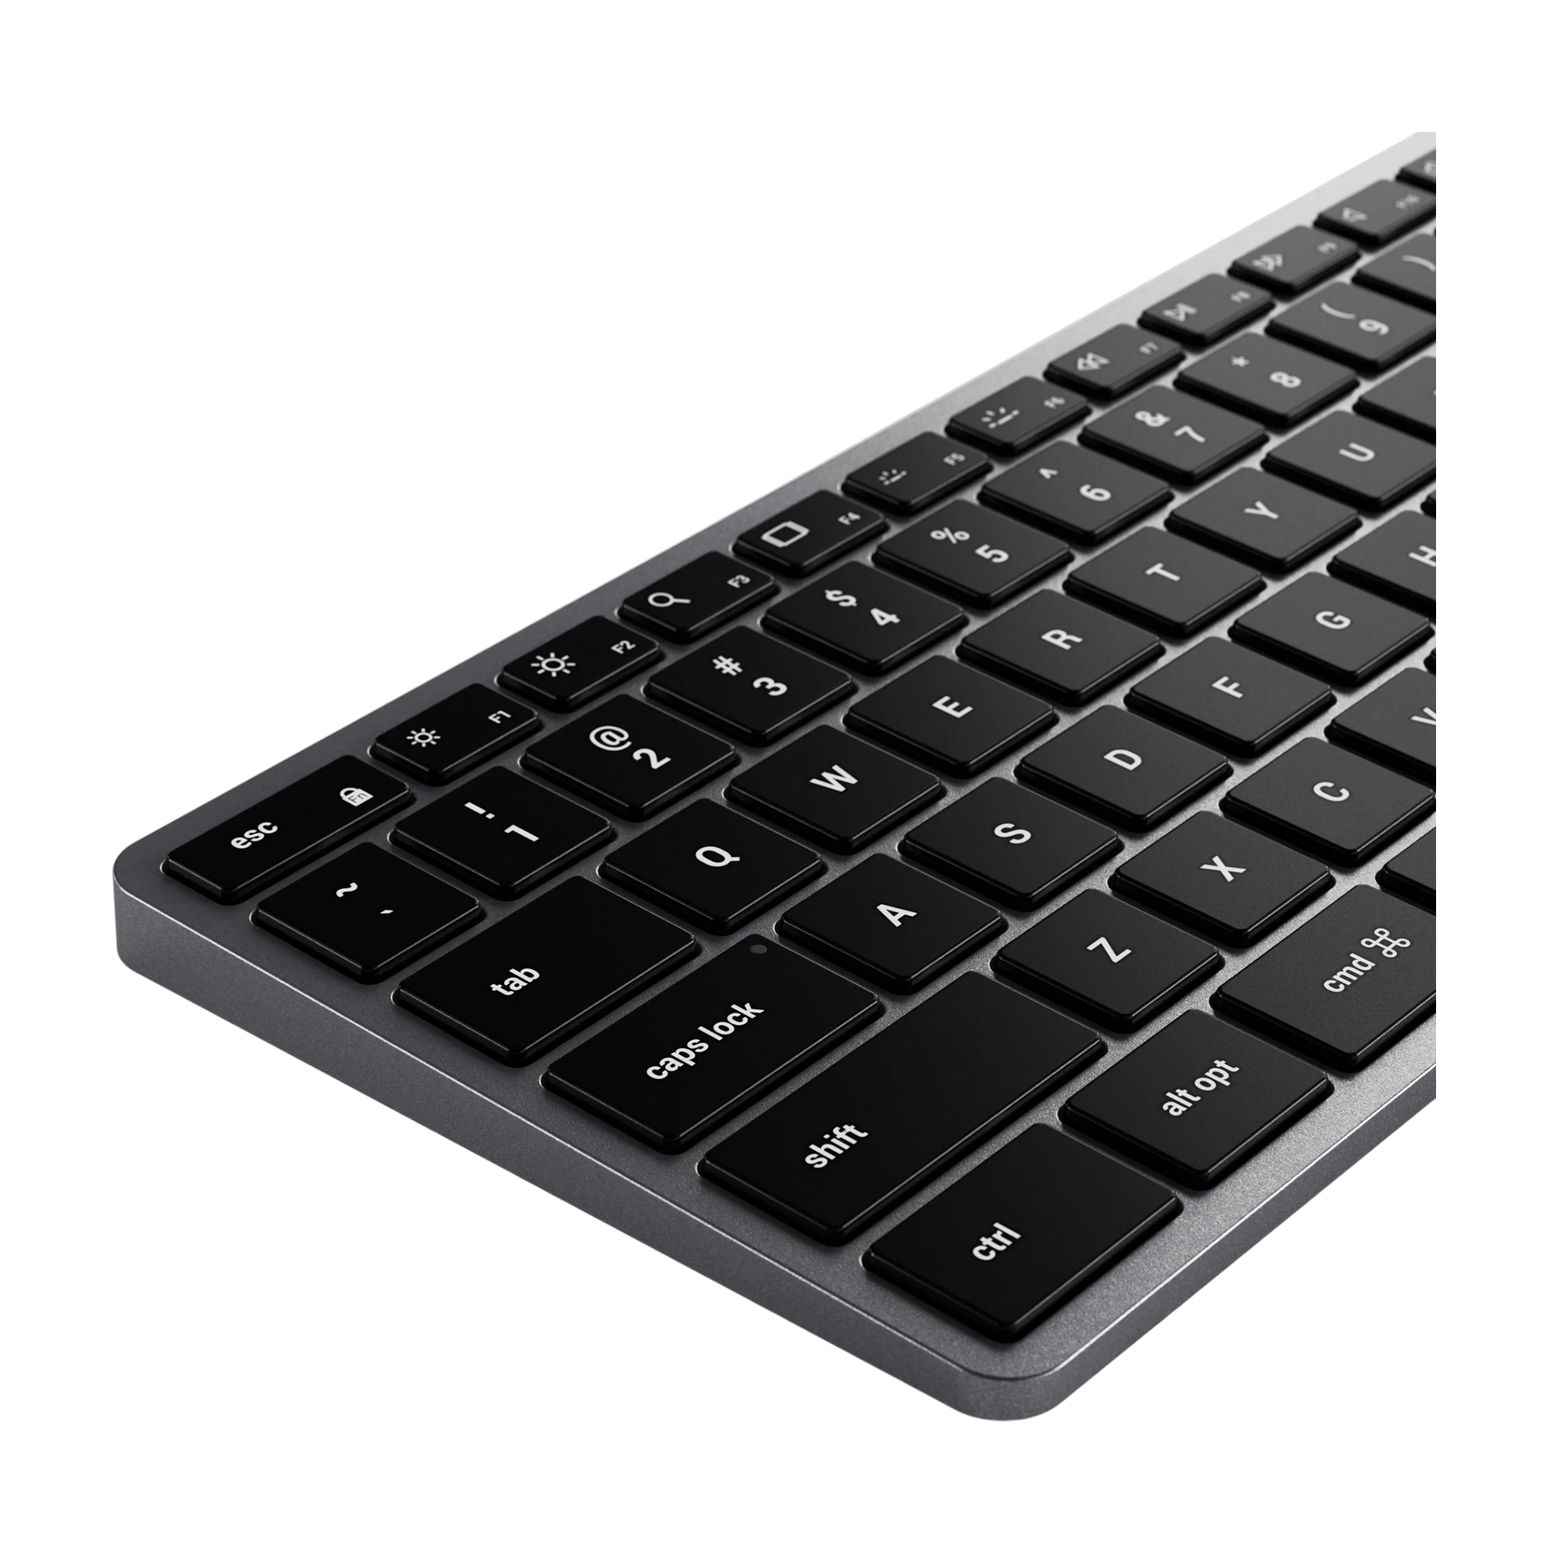 Satechi Slim X3 Bluetooth Backlit Keyboard - Space Grey